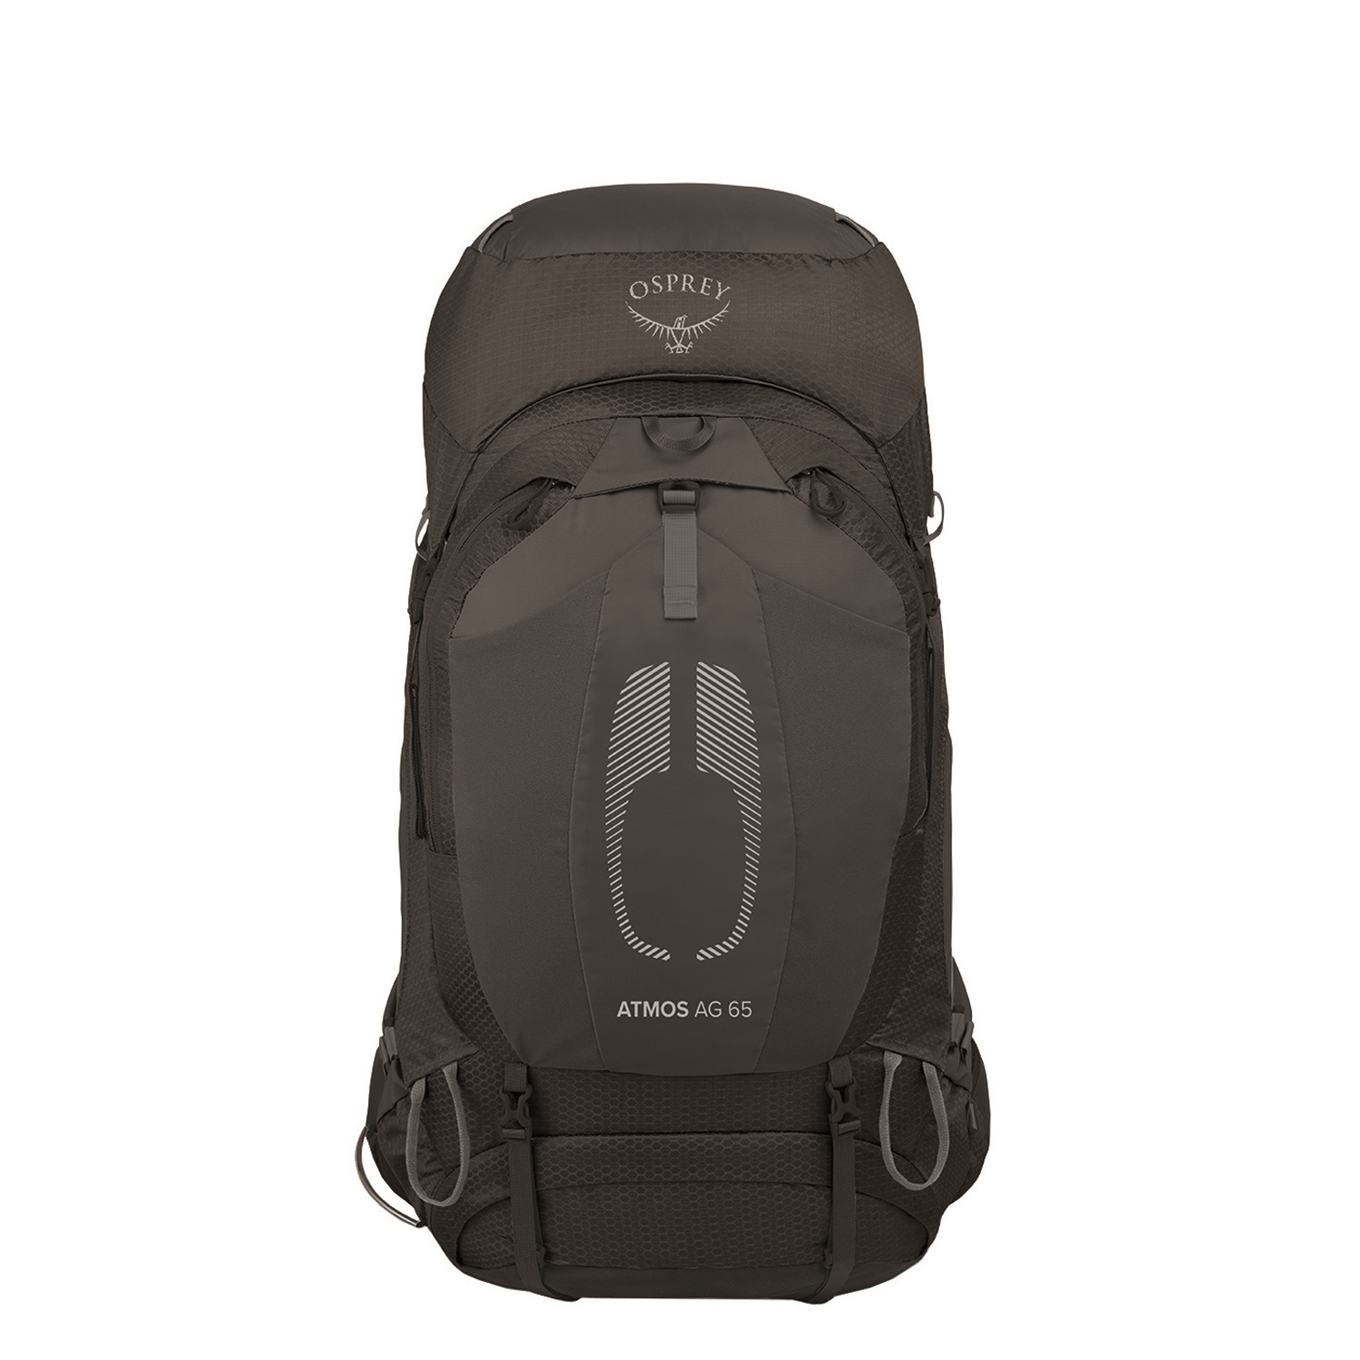 Osprey Atmos AG 65 L/XL black backpack